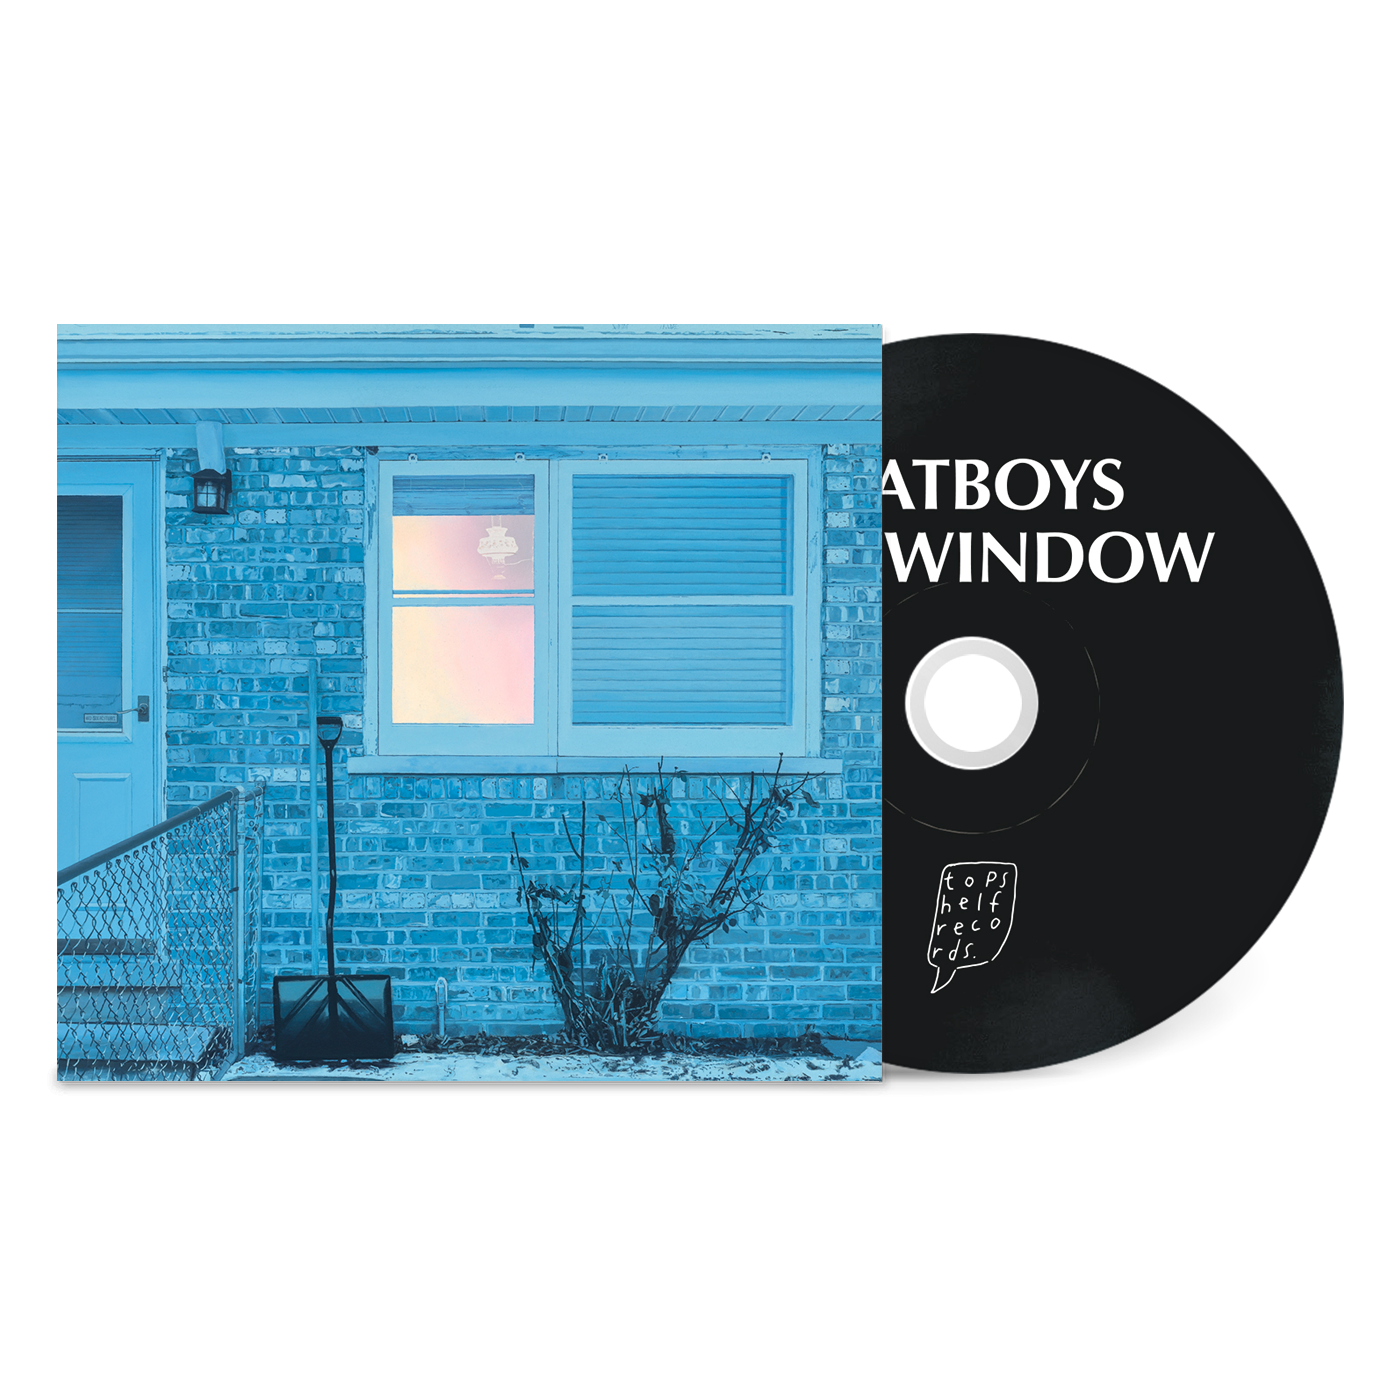 The Window CD